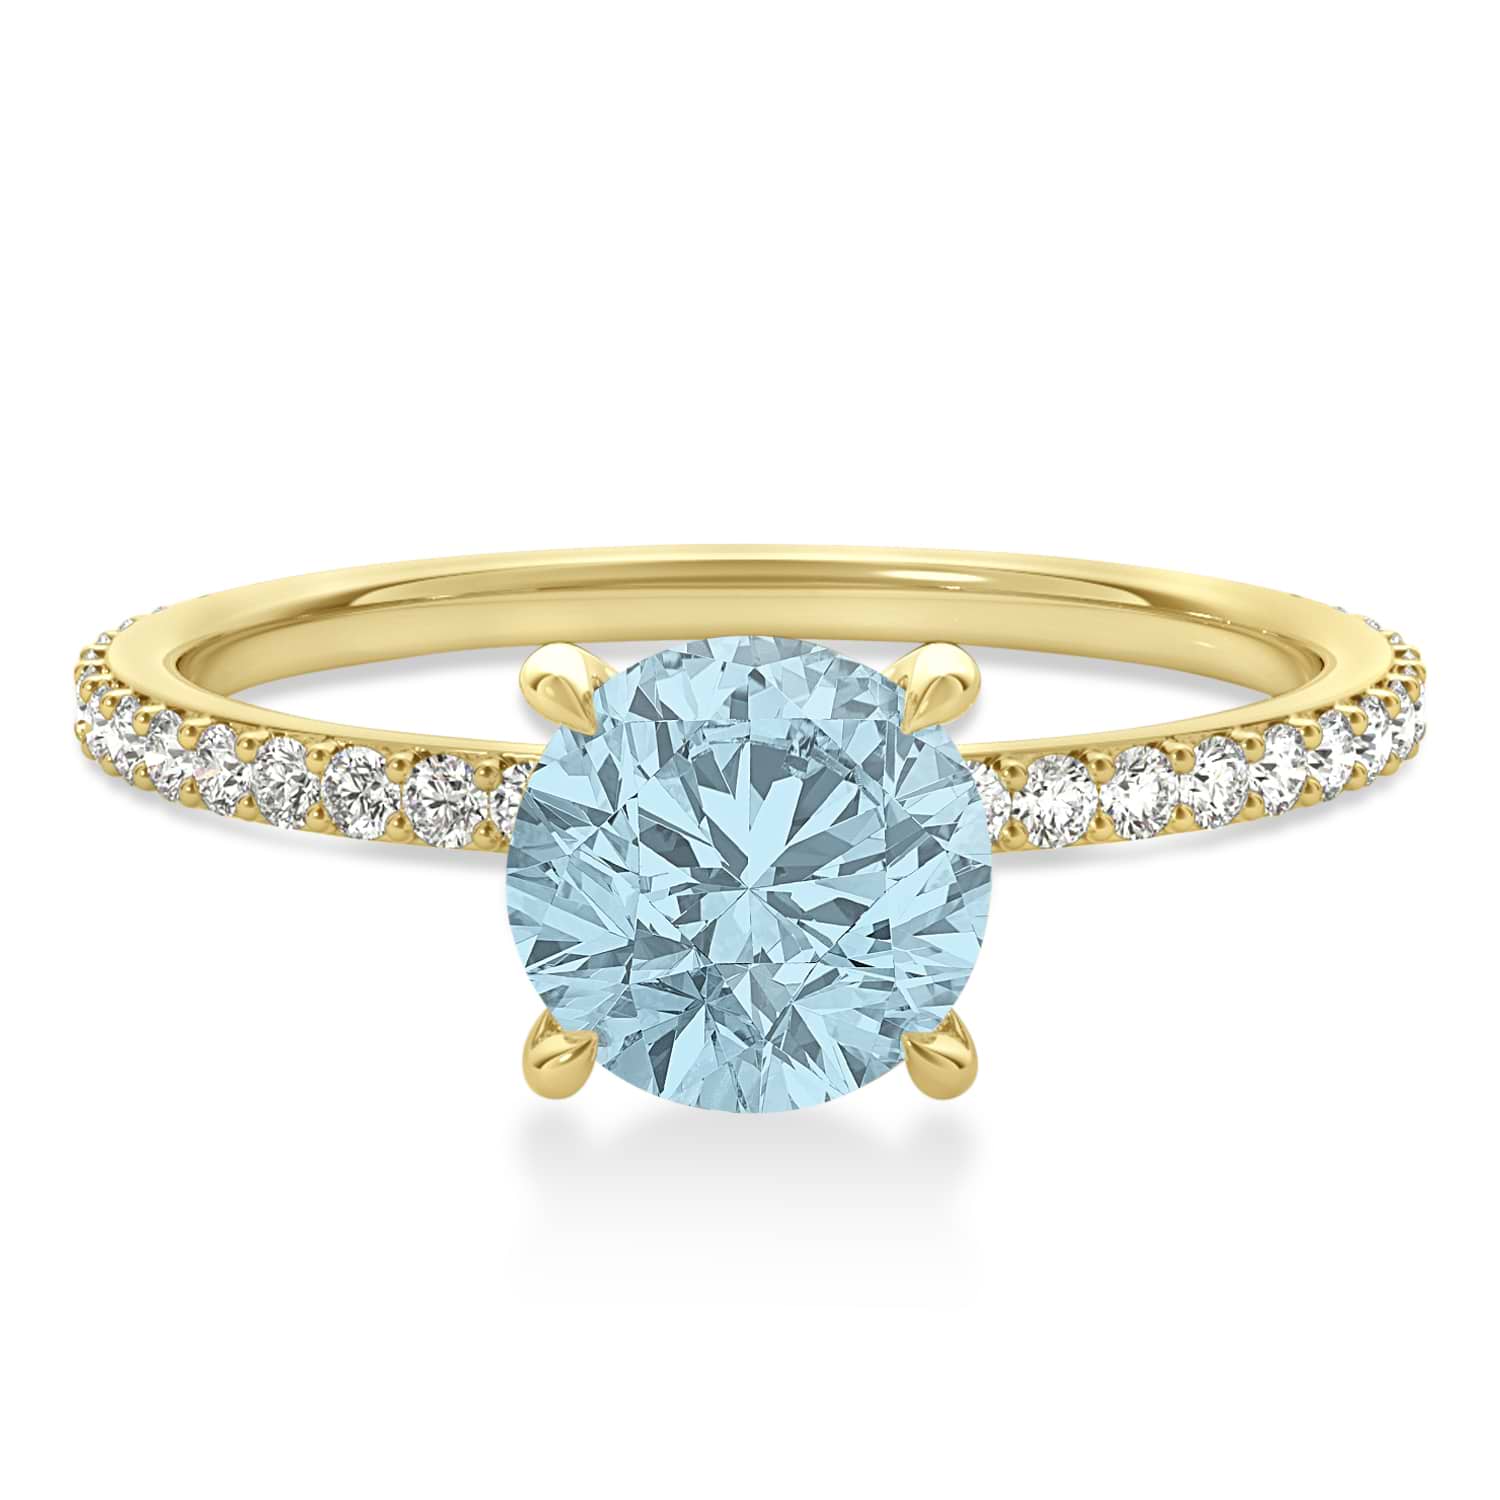 Round Aquamarine & Diamond Hidden Halo Engagement Ring 18k Yellow Gold (1.68ct)